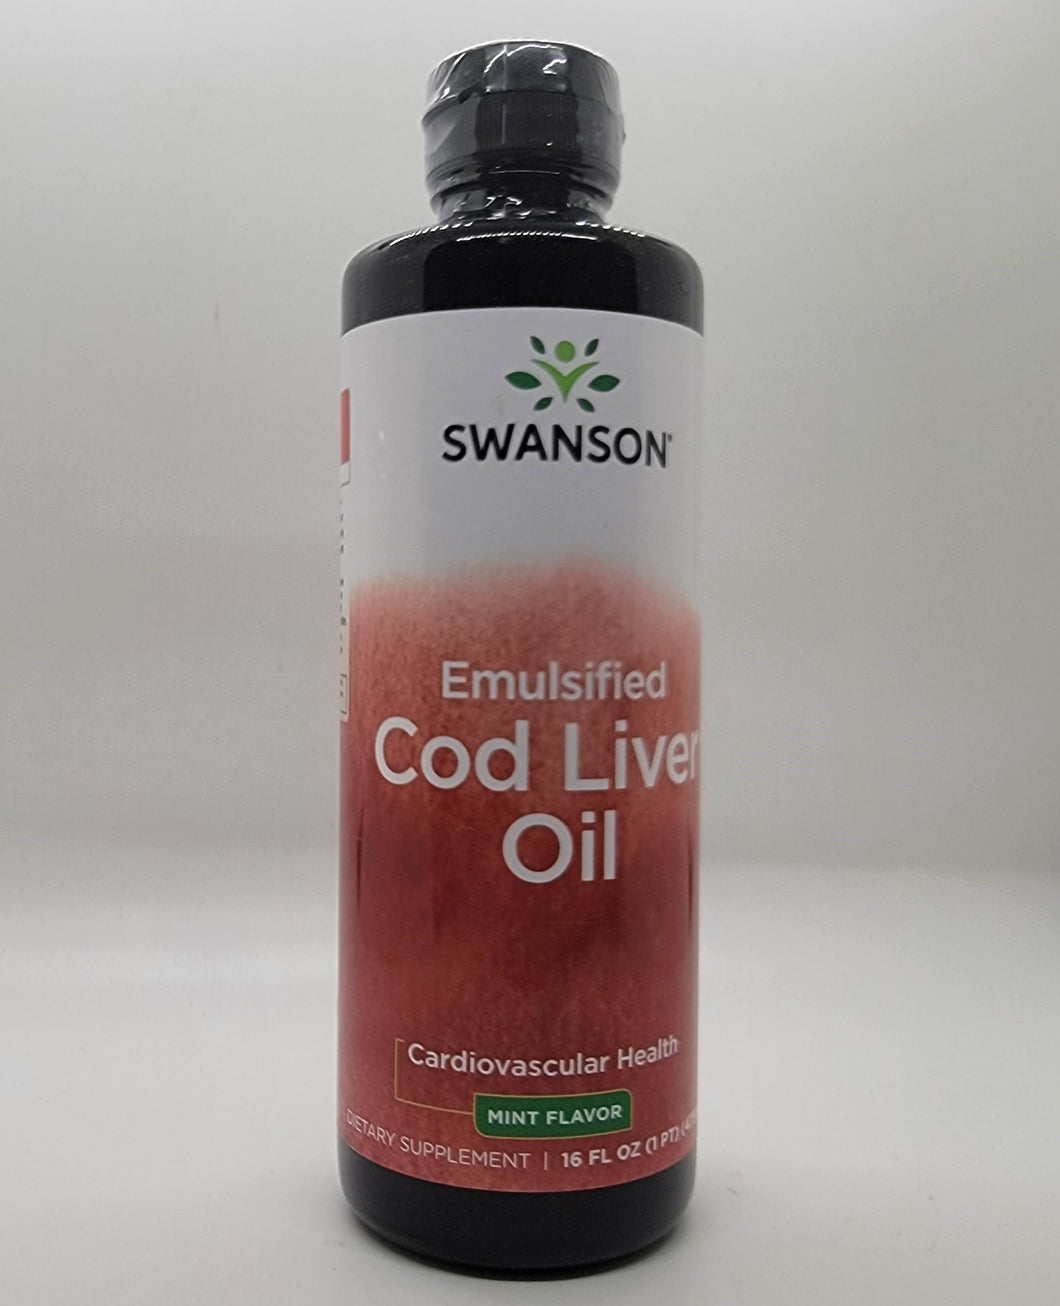 Swanson Emulsified Cod Liver Oil